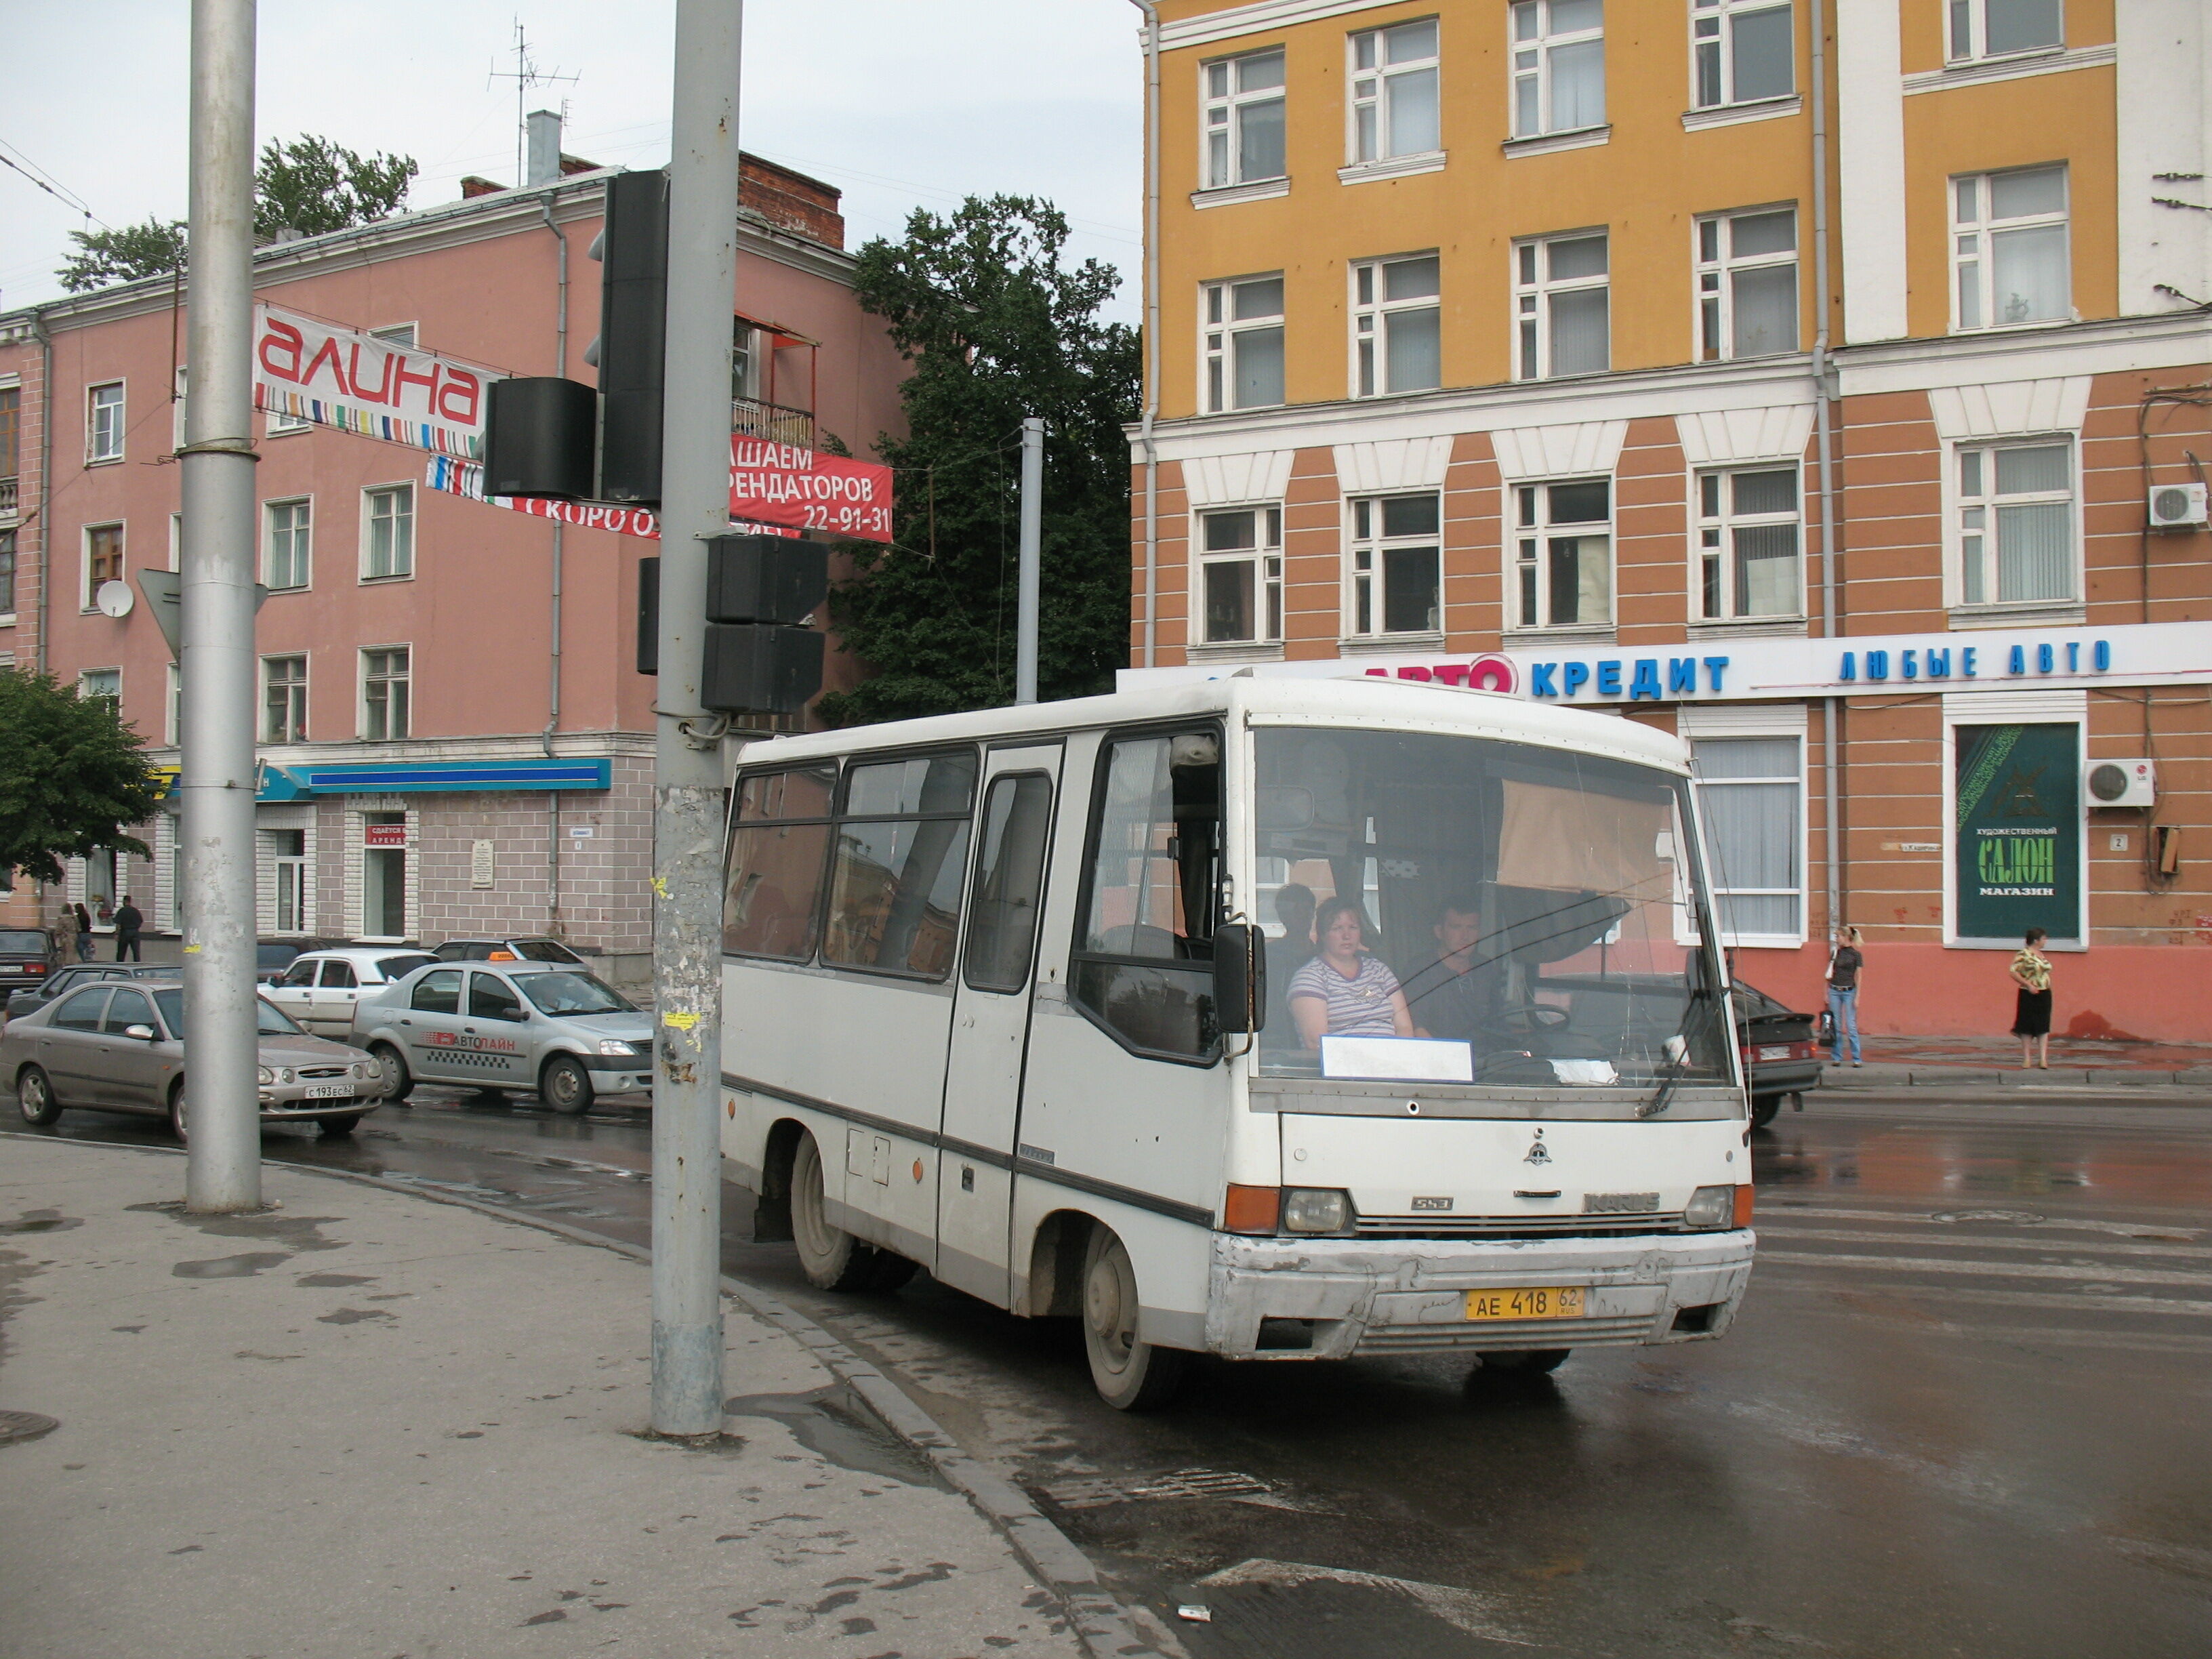 Автобус Ikarus 543.27 АЕ 418 62